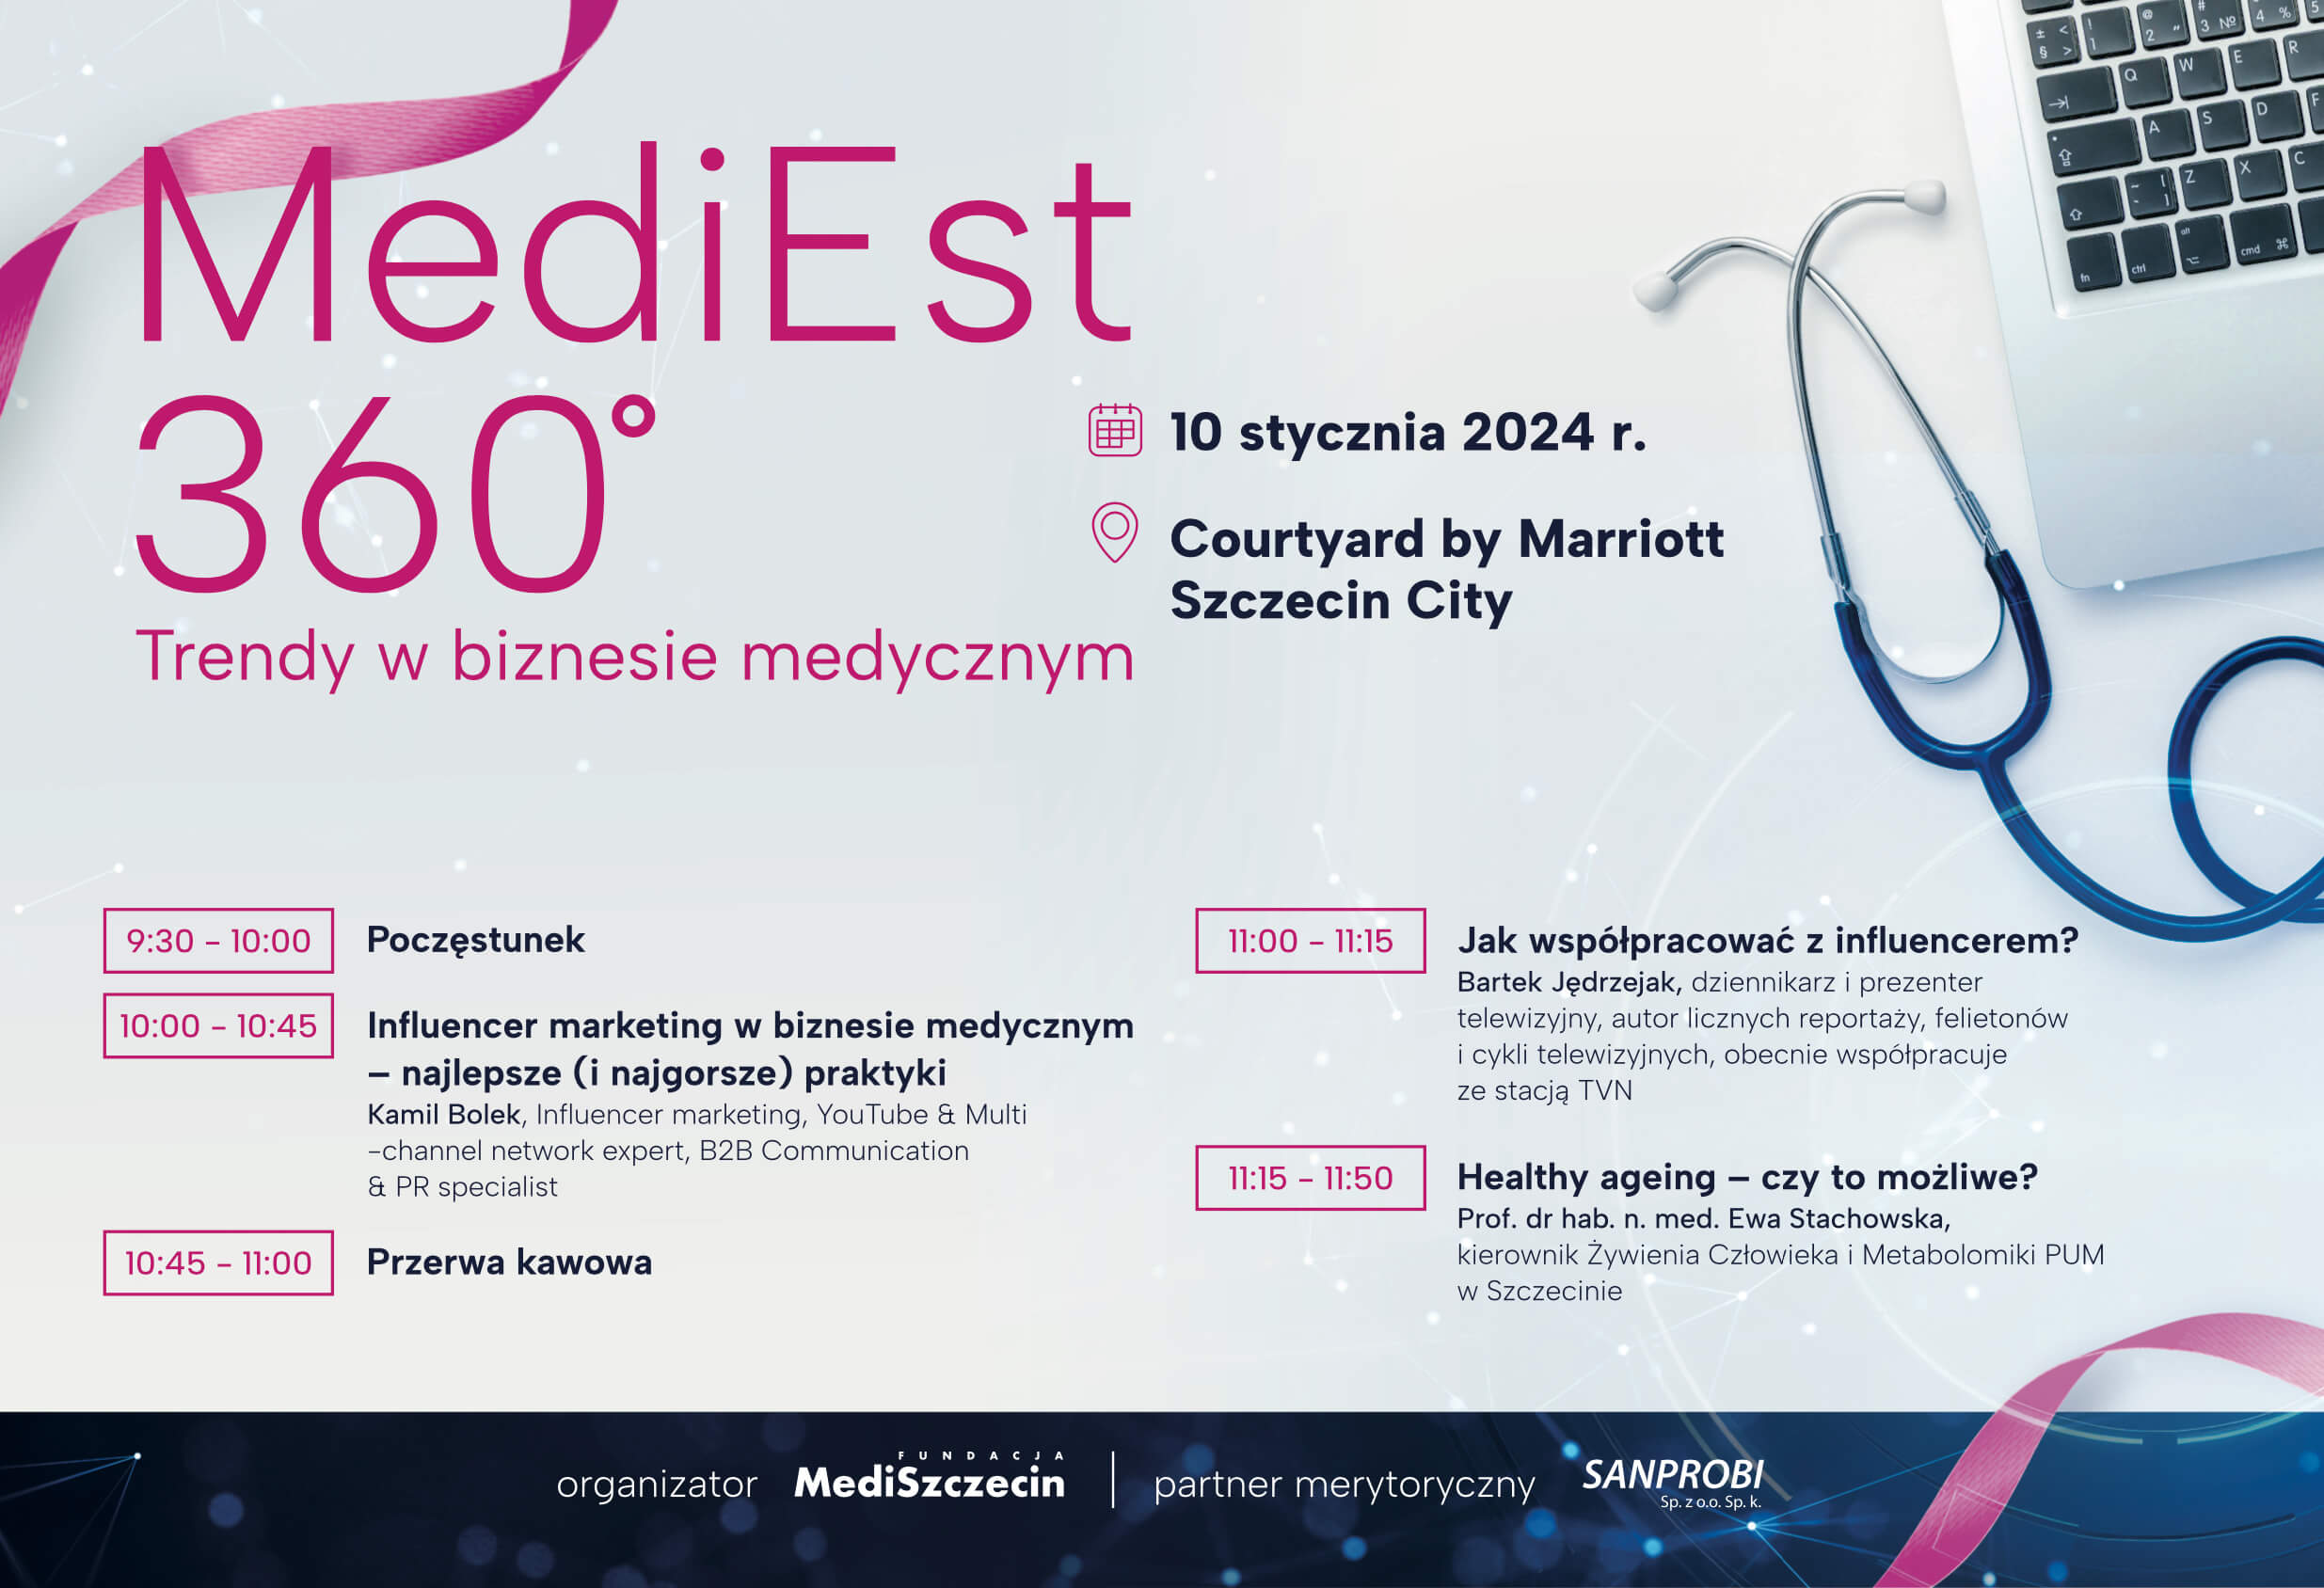 MediEst 360